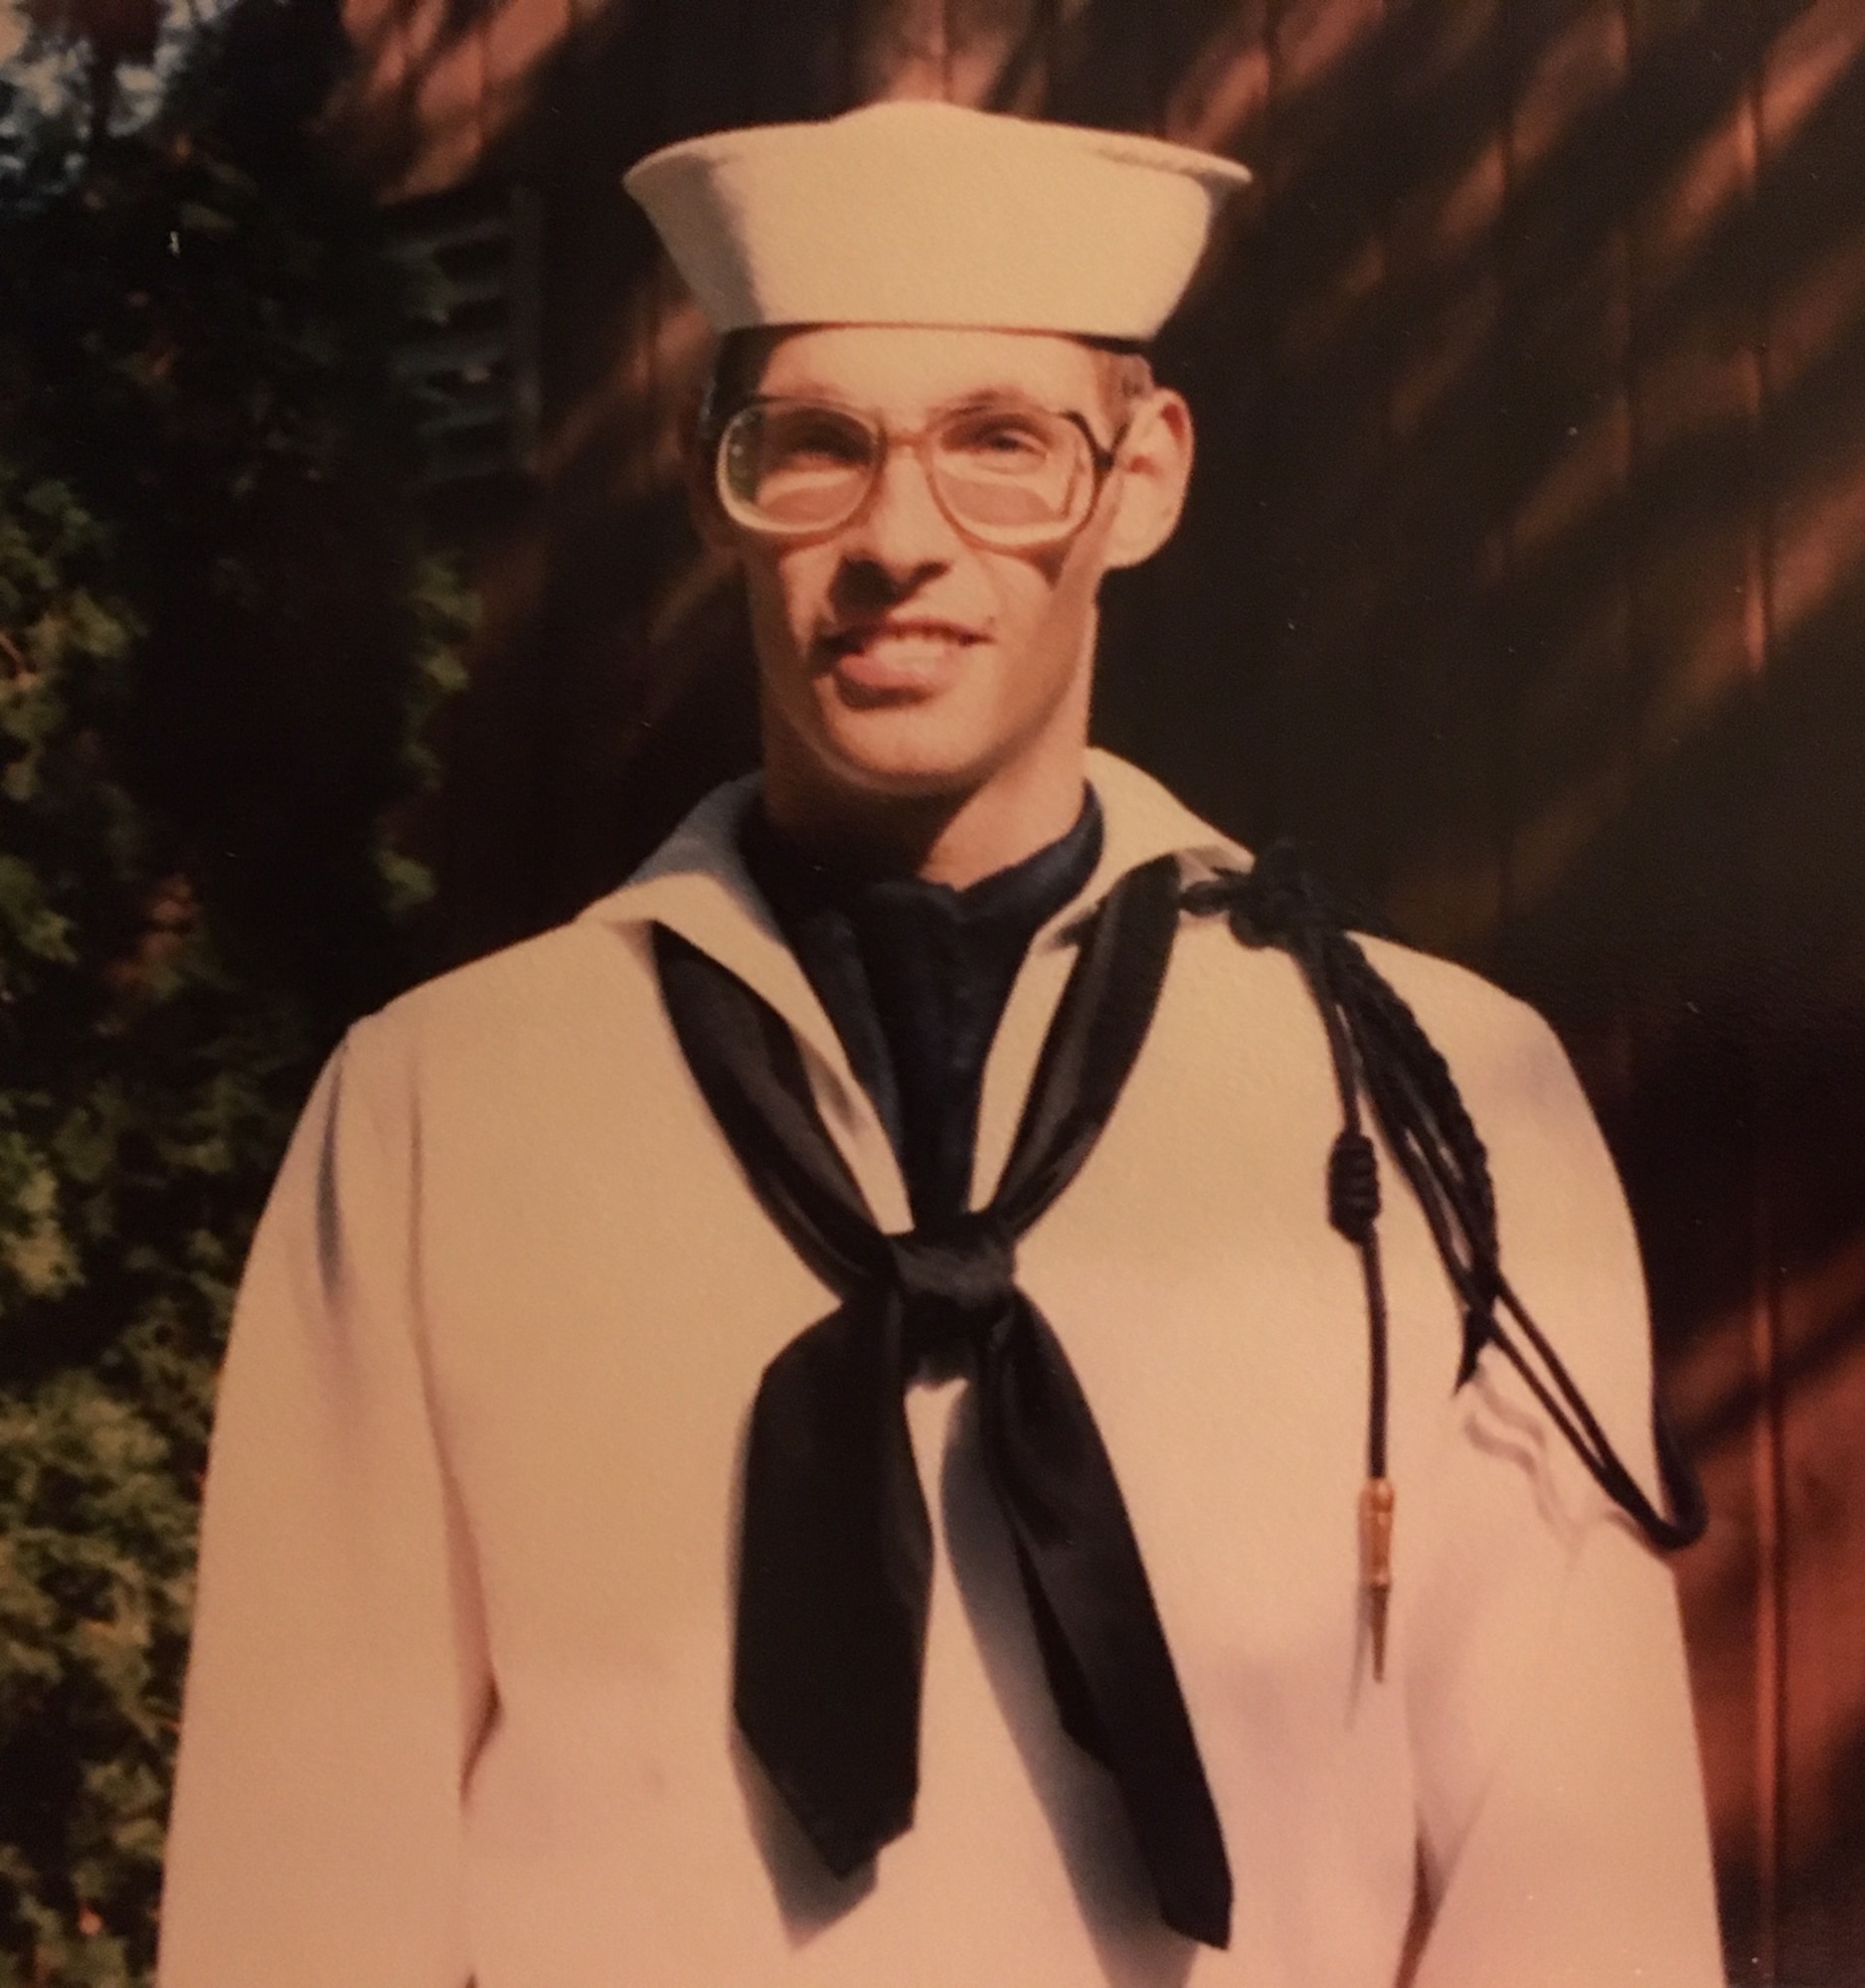 Navy sailor